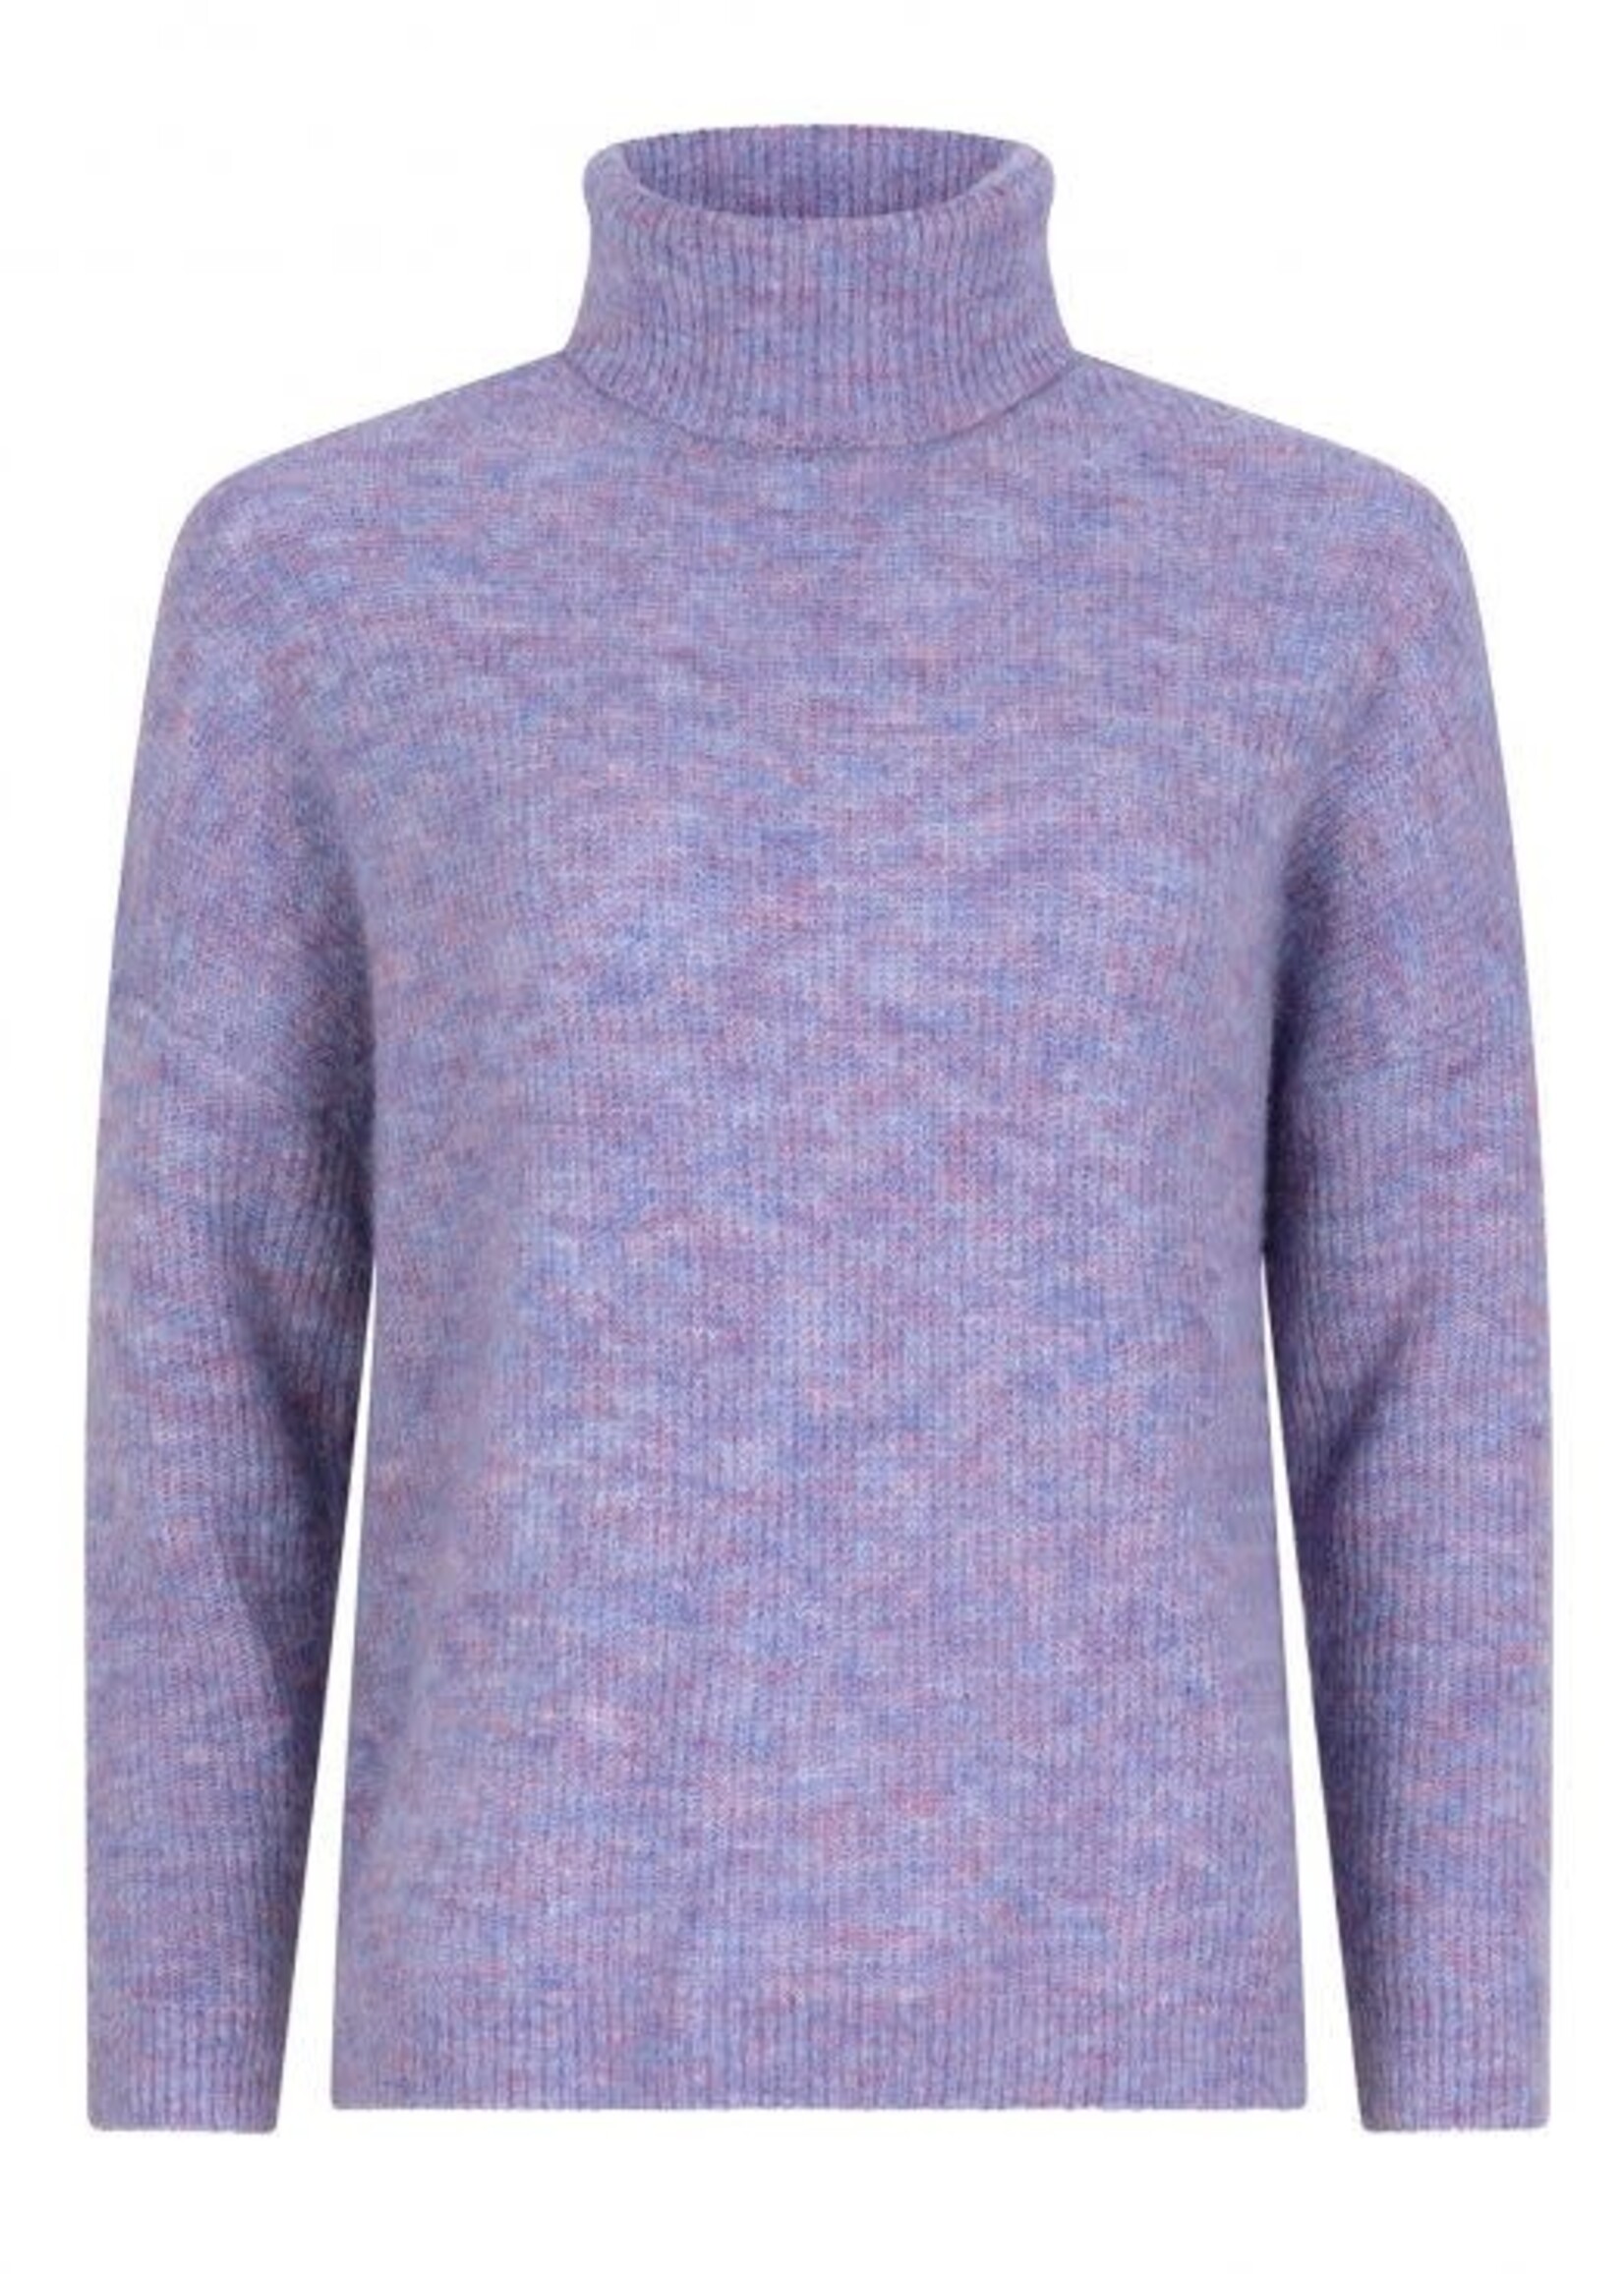 Ydence Knitted Sweater Kiki Lilac melange